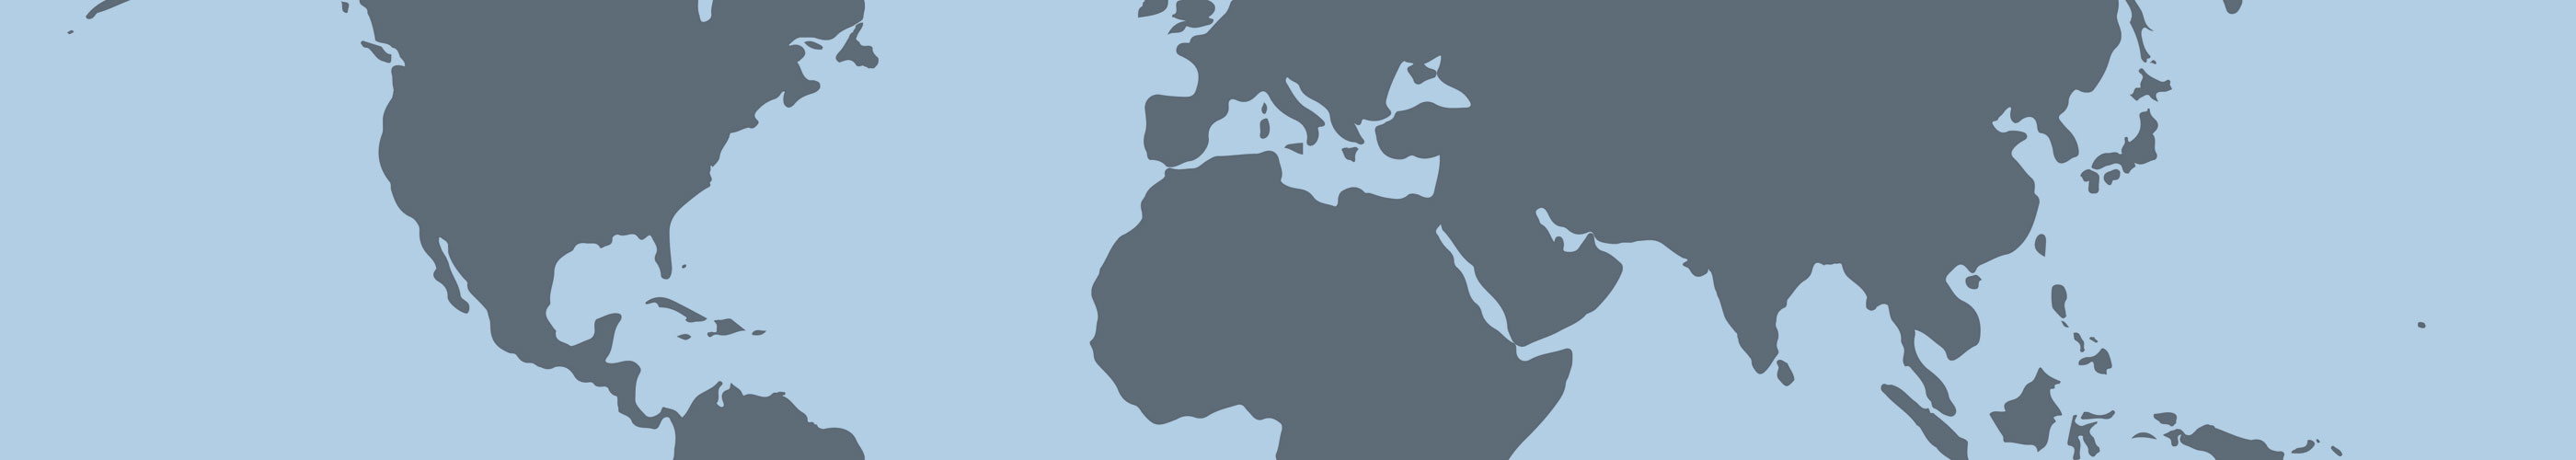 RMI's Global Risk Map